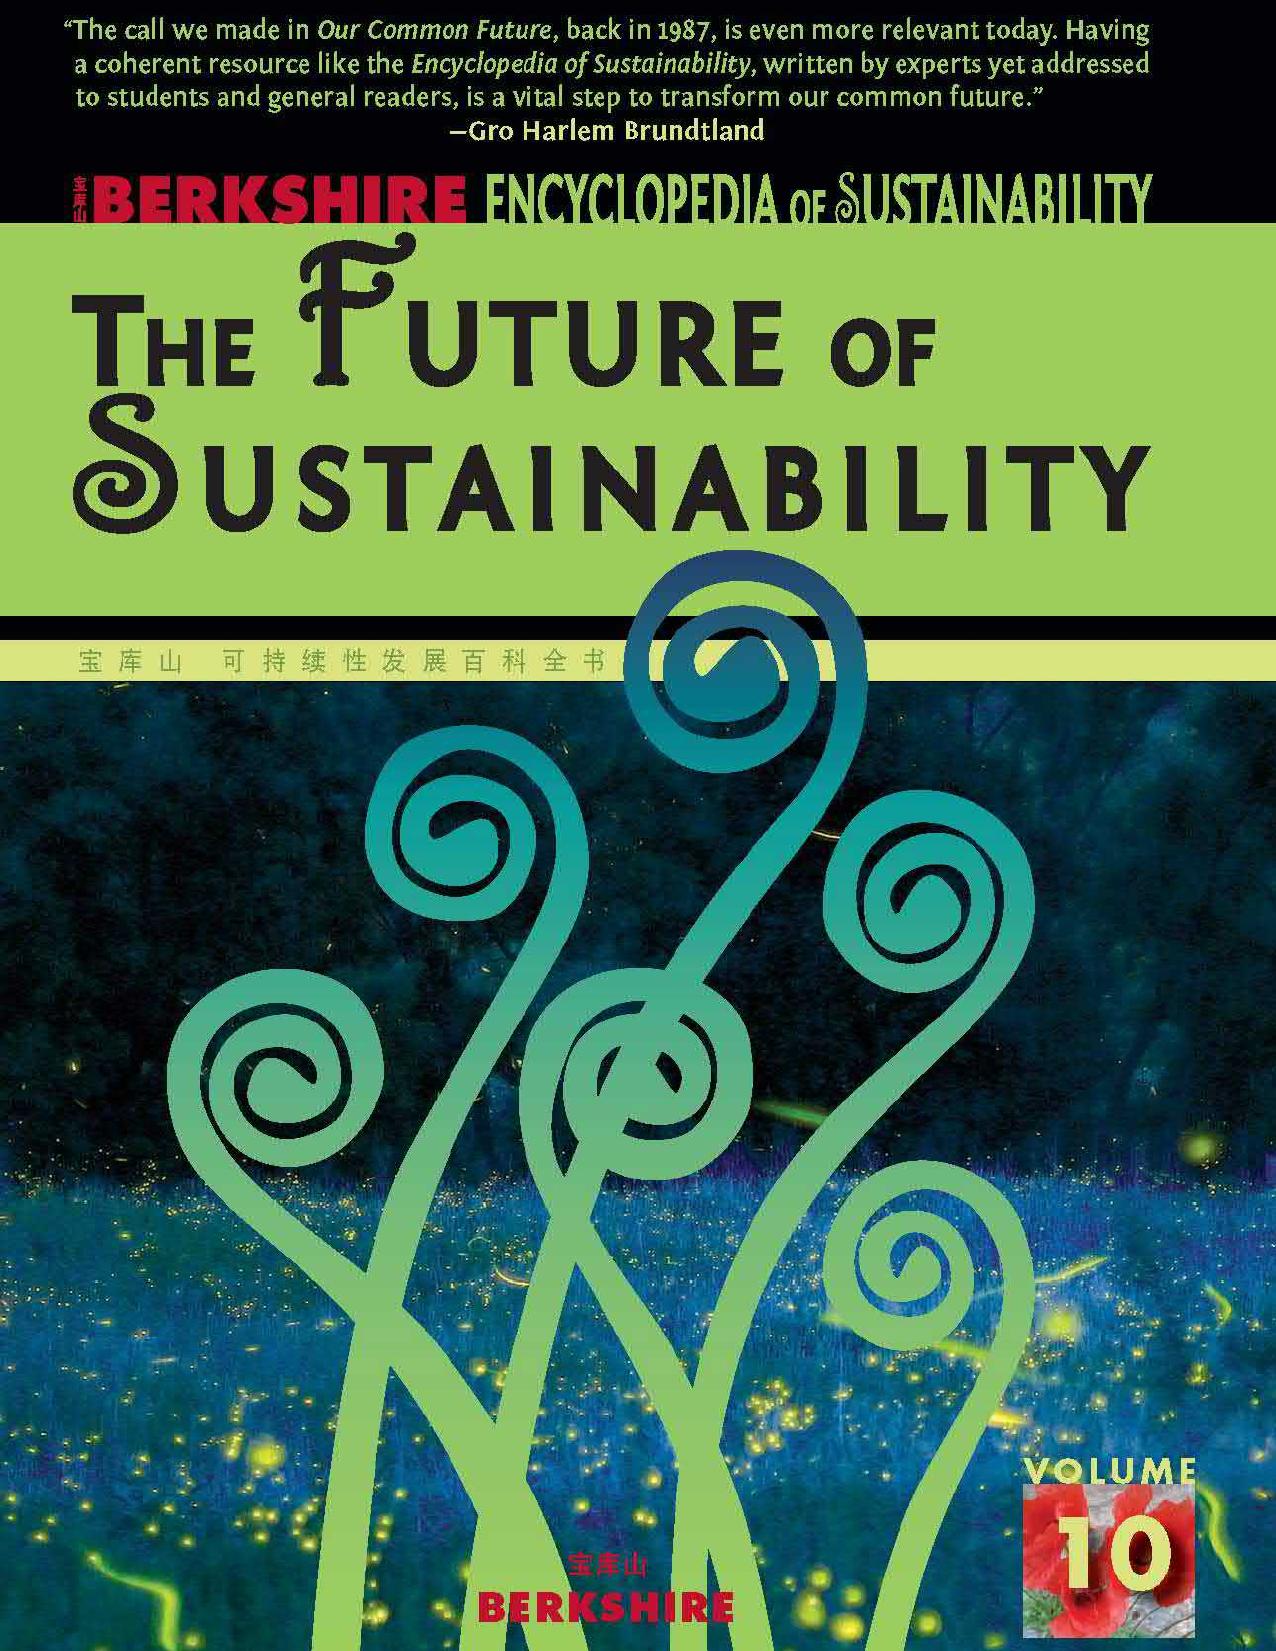 Berkshire Encyclopedia of Sustainability 10/10: The Future of Sustainability